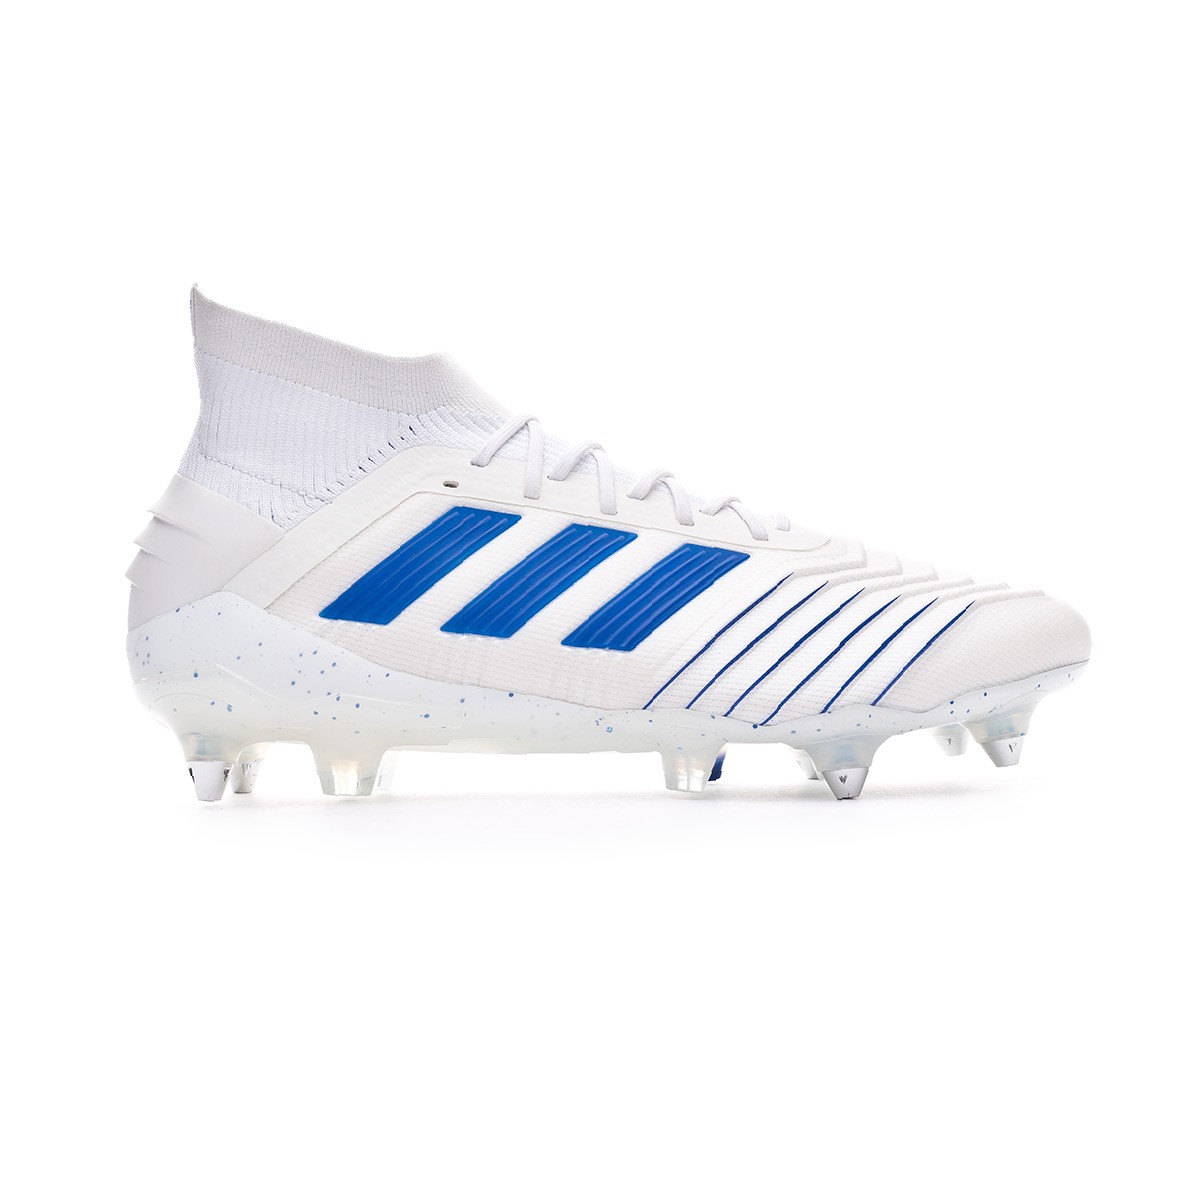 adidas predator 19.1 blue and white